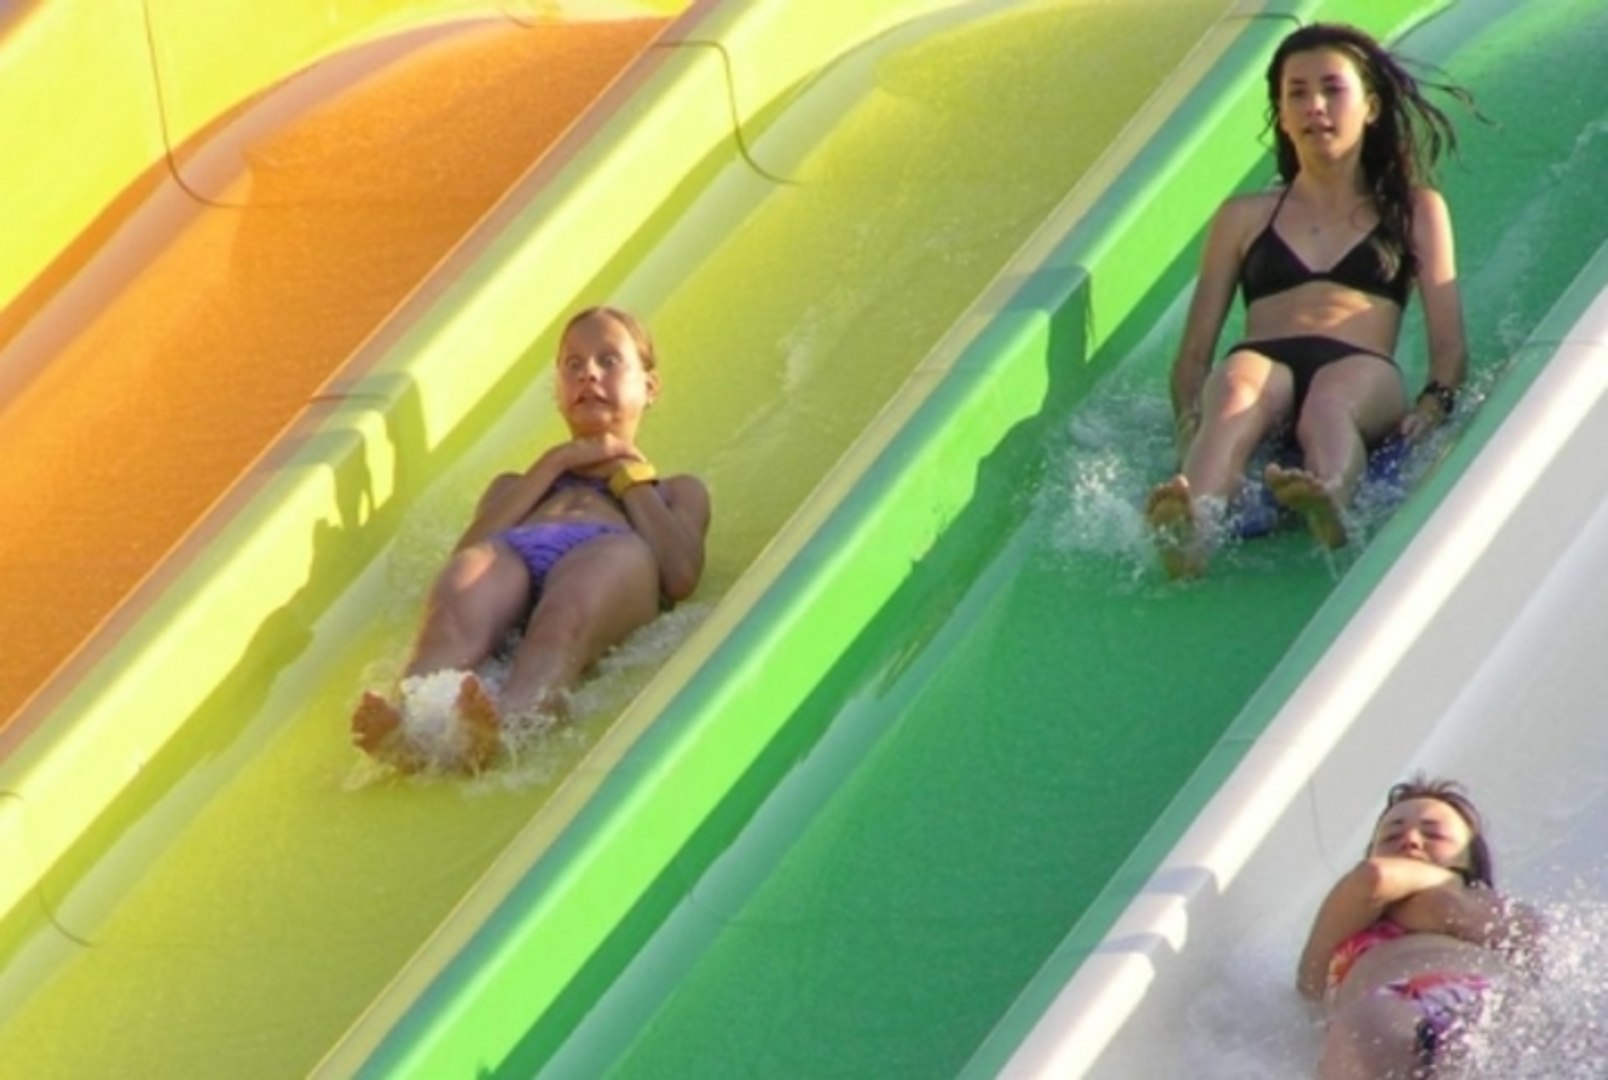 carlton pereira recommends Water Slide Bikini Malfunctions